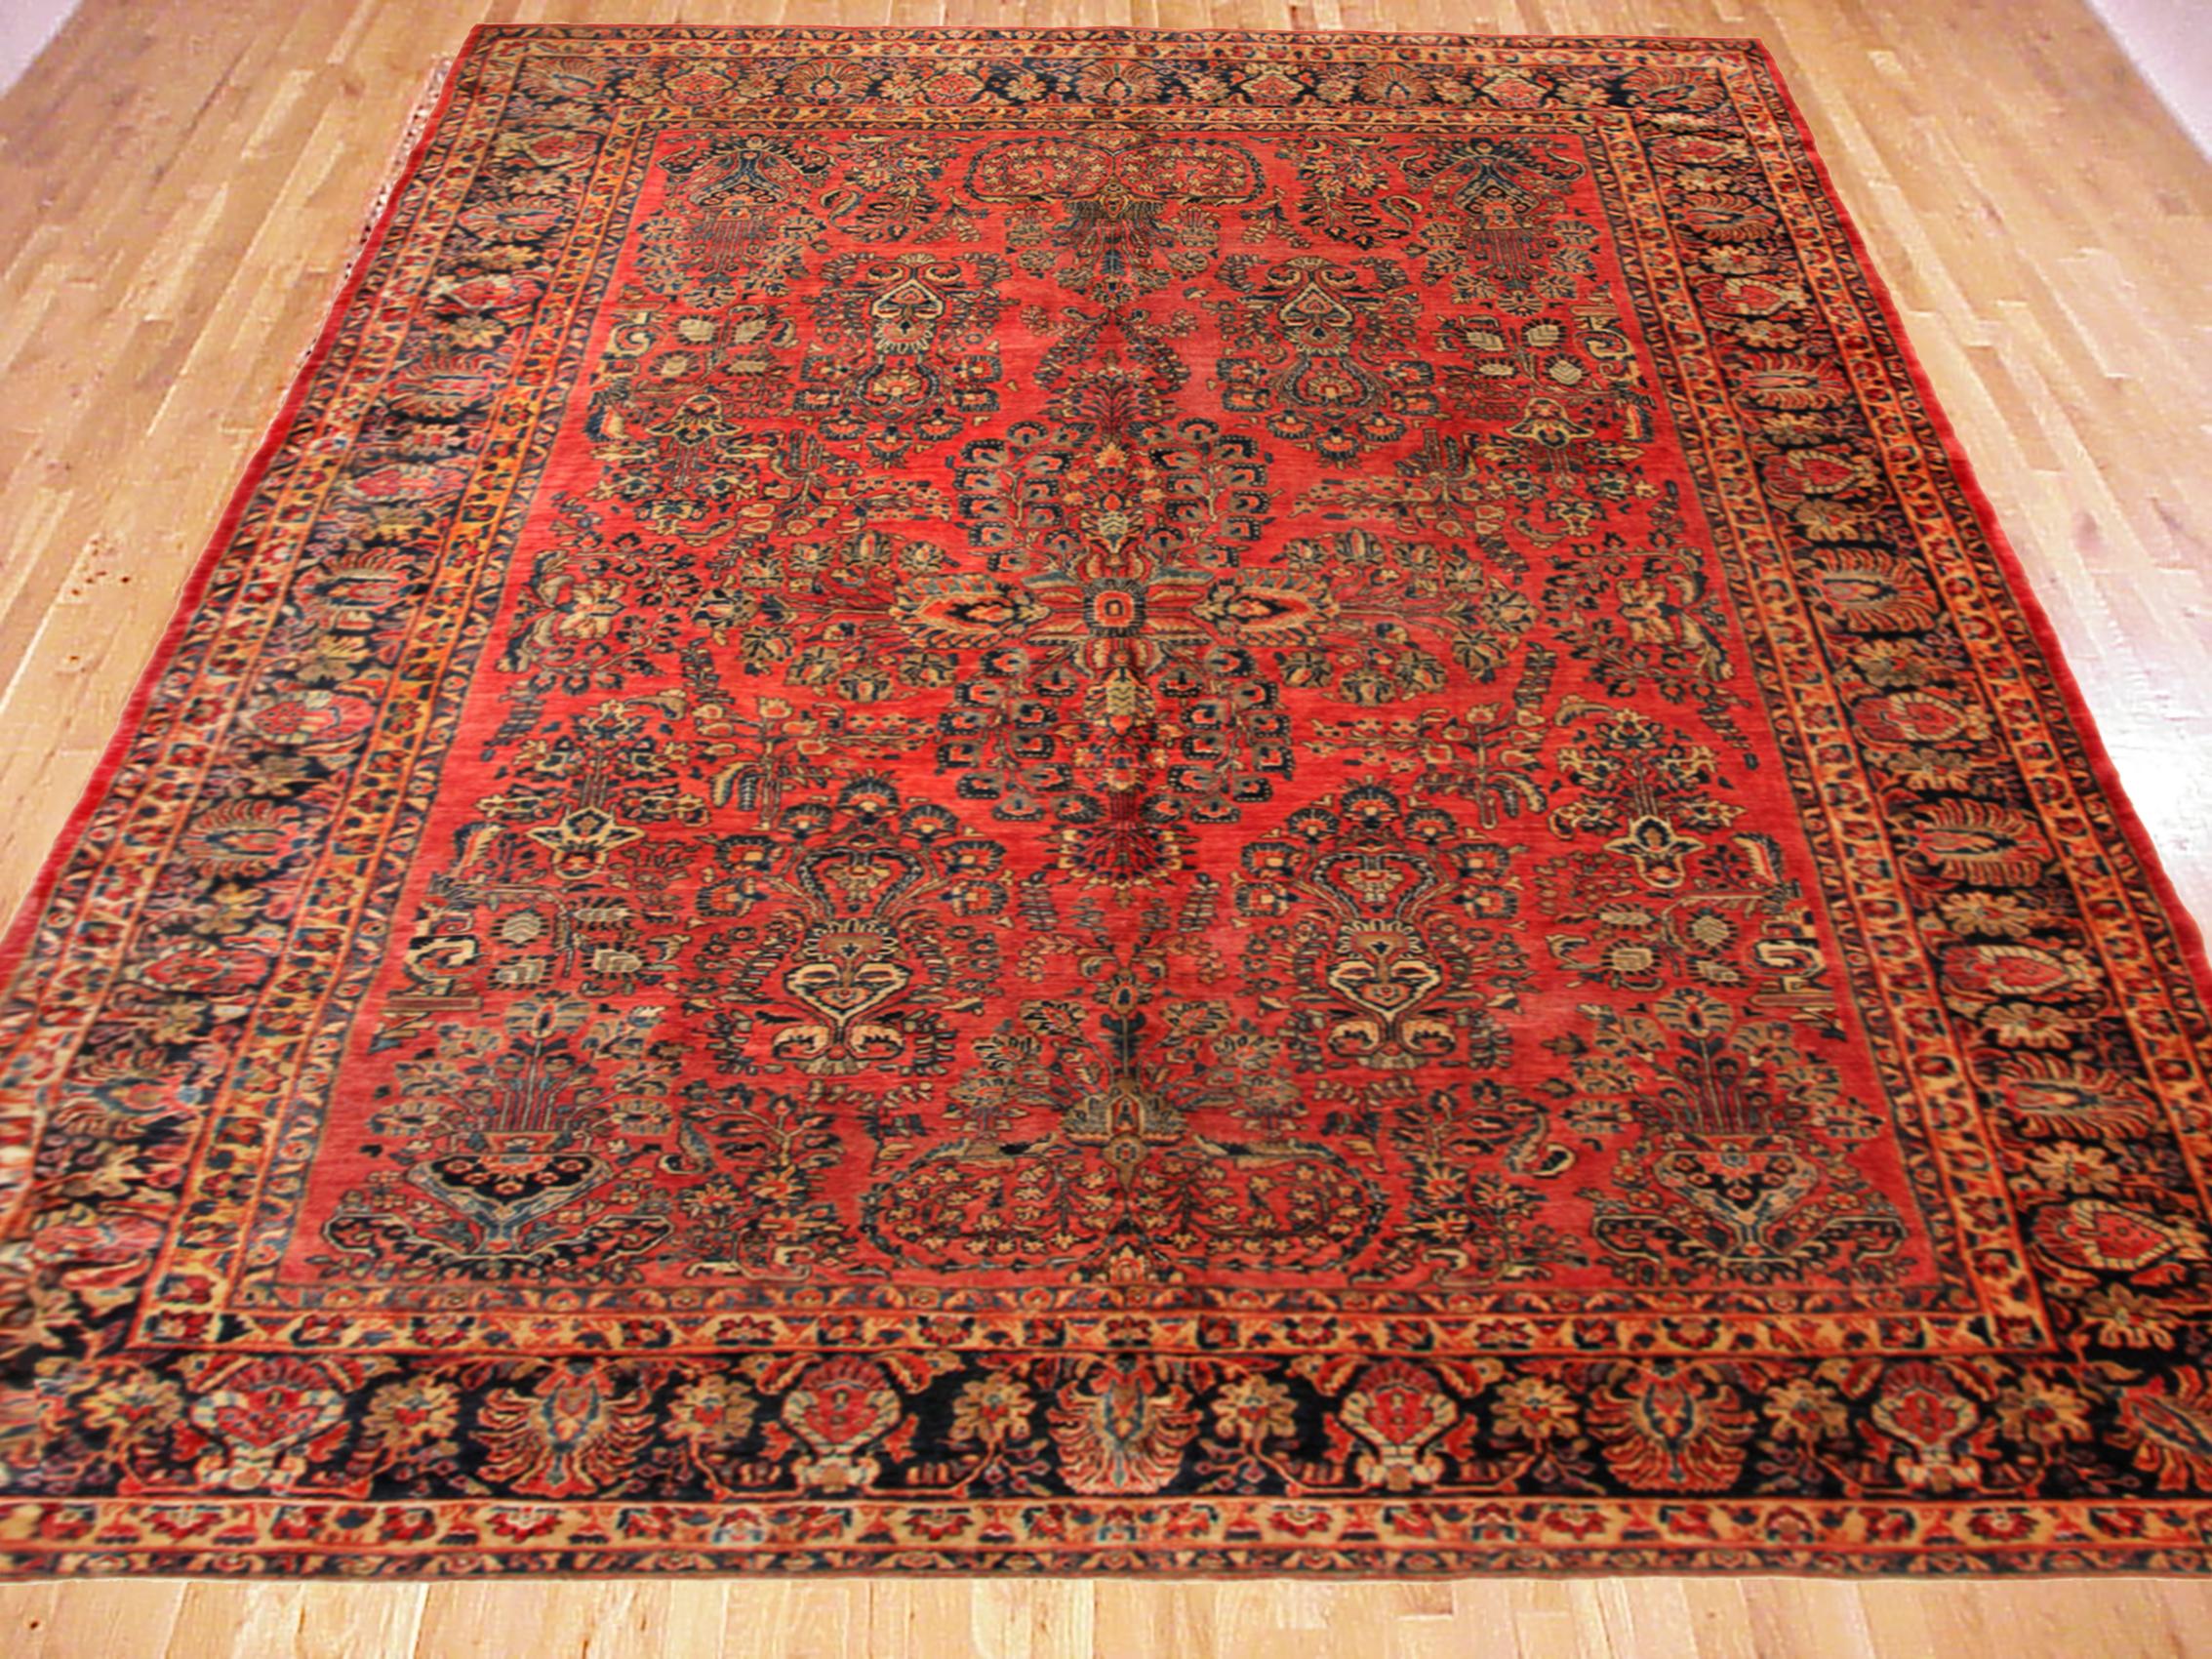 Vintage Persian Sarouk Oriental rug, circa 1920, Room size.

A vintage Persian Sarouk oriental rug, size 11'7